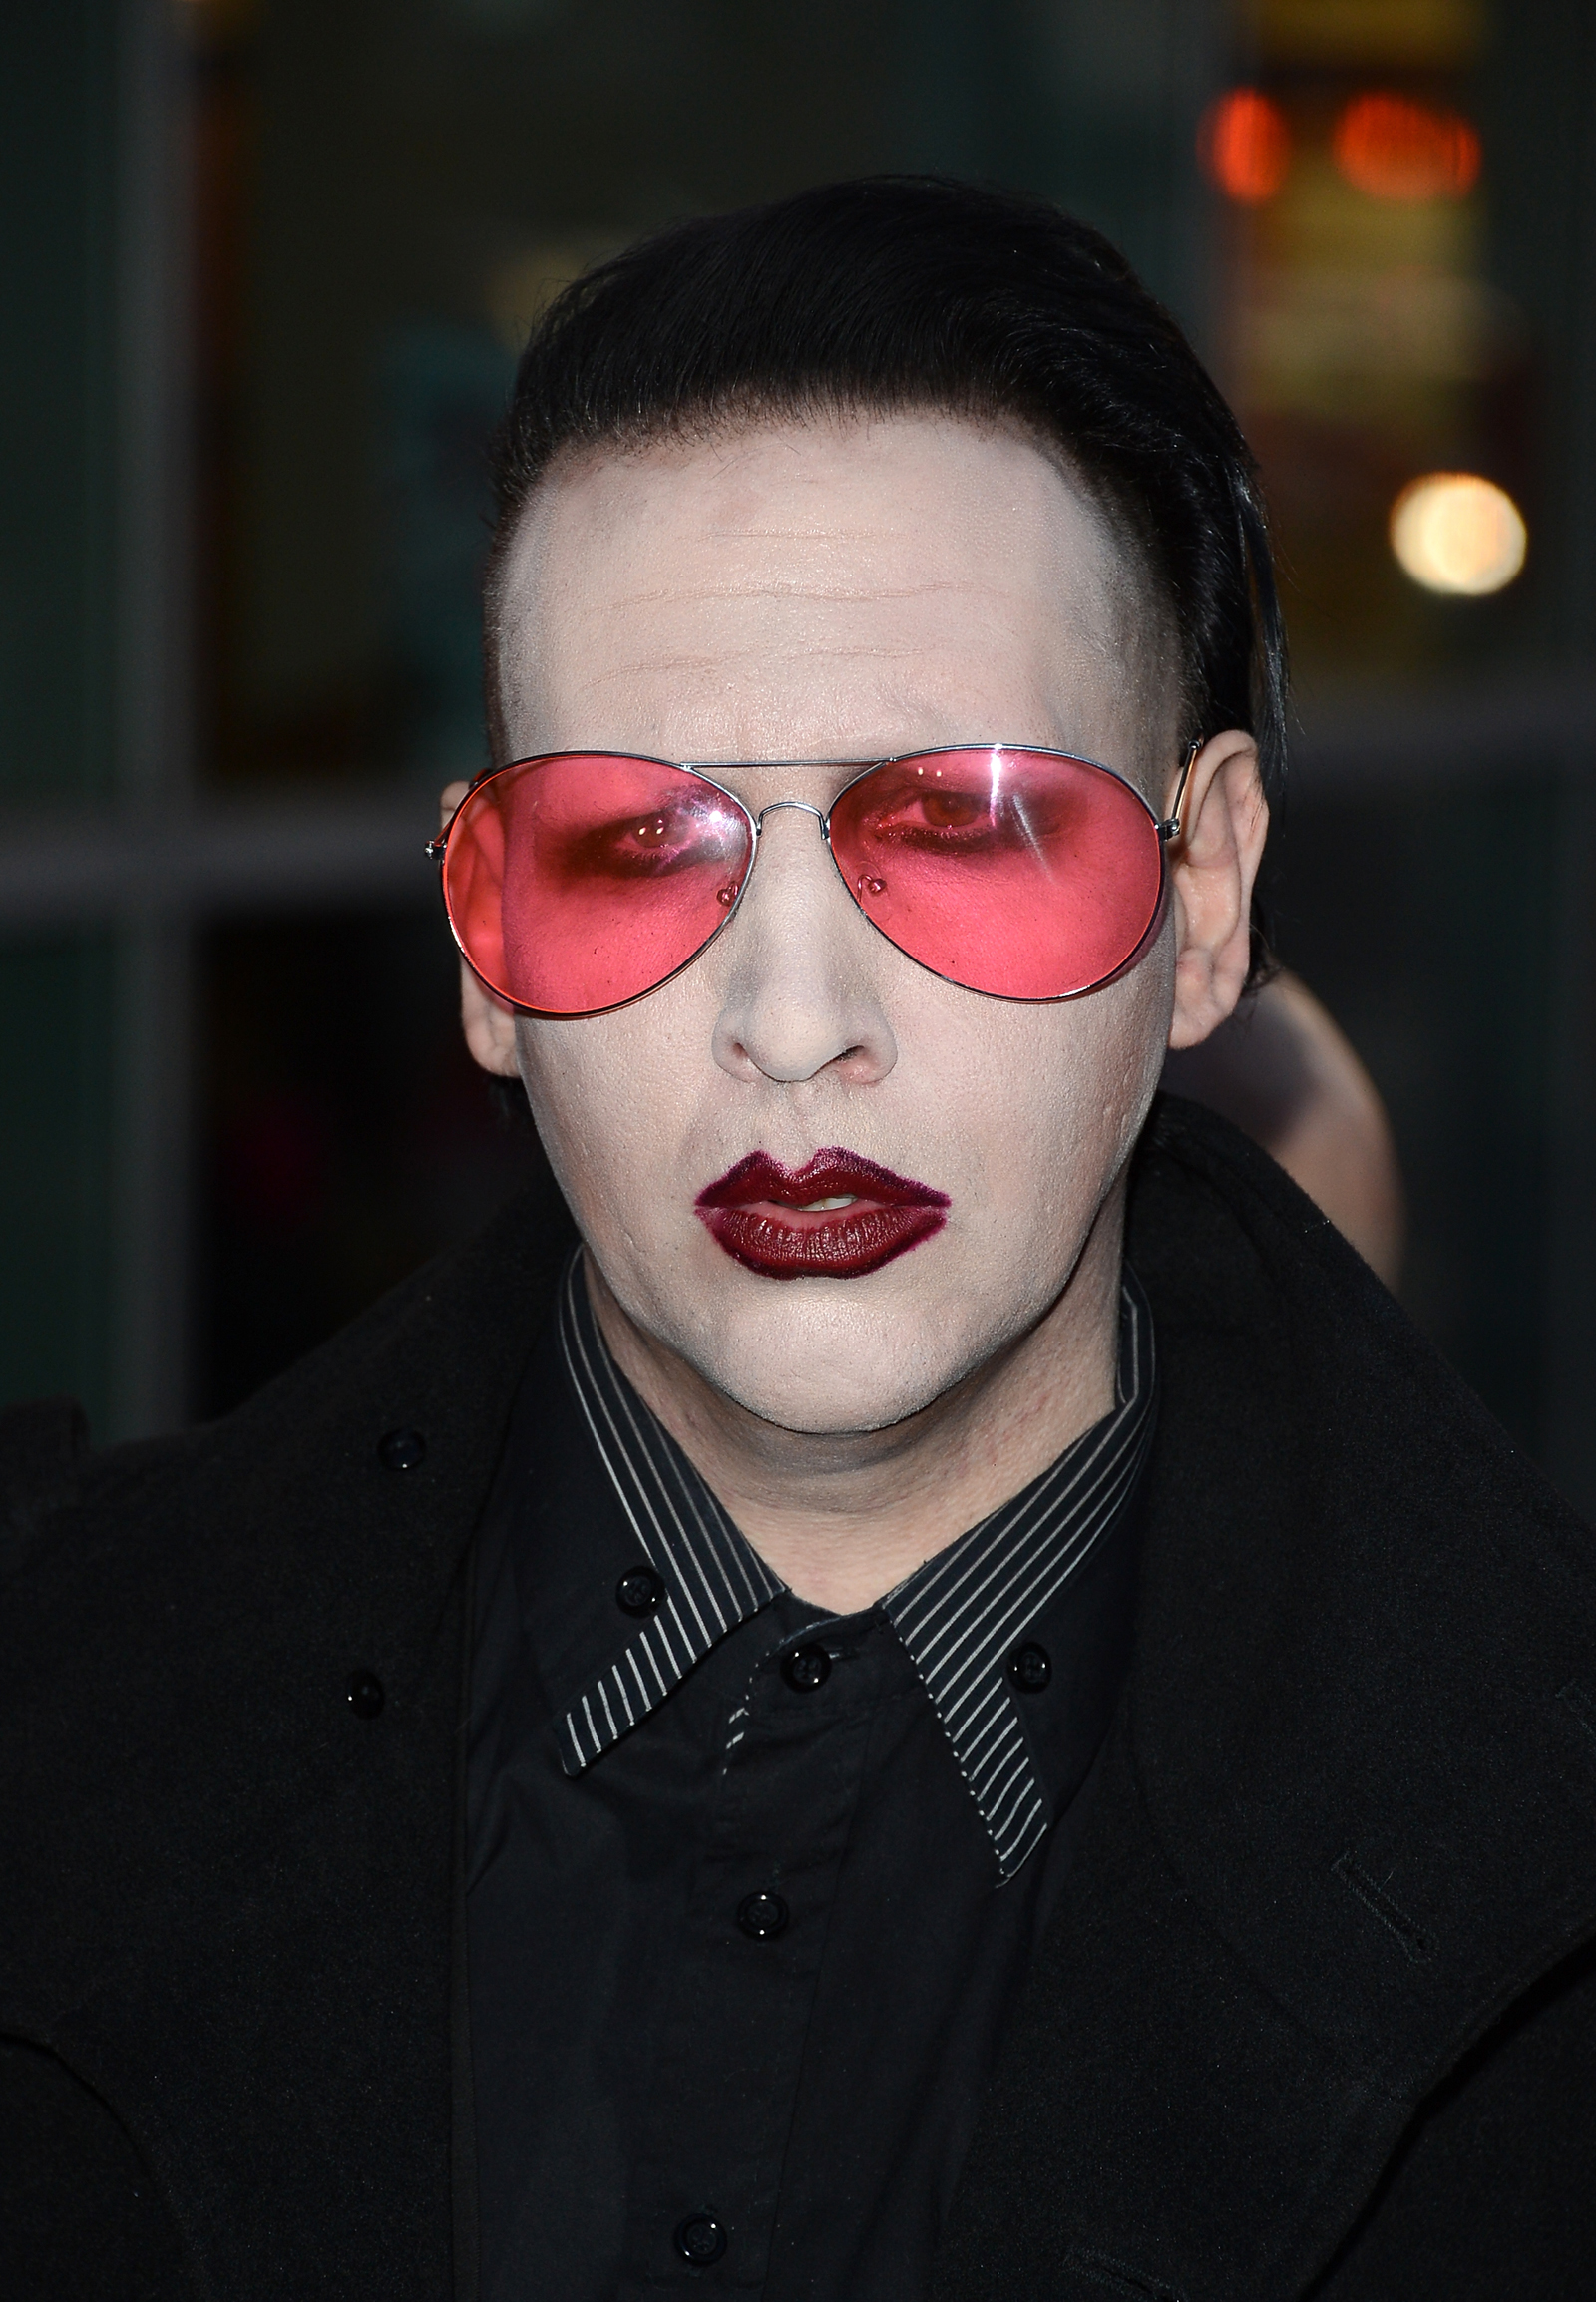 Macintosh HD:Users:brittanyloeffler:Downloads:Upwork:Marilyn Manson:3-marilyn-manson.jpg